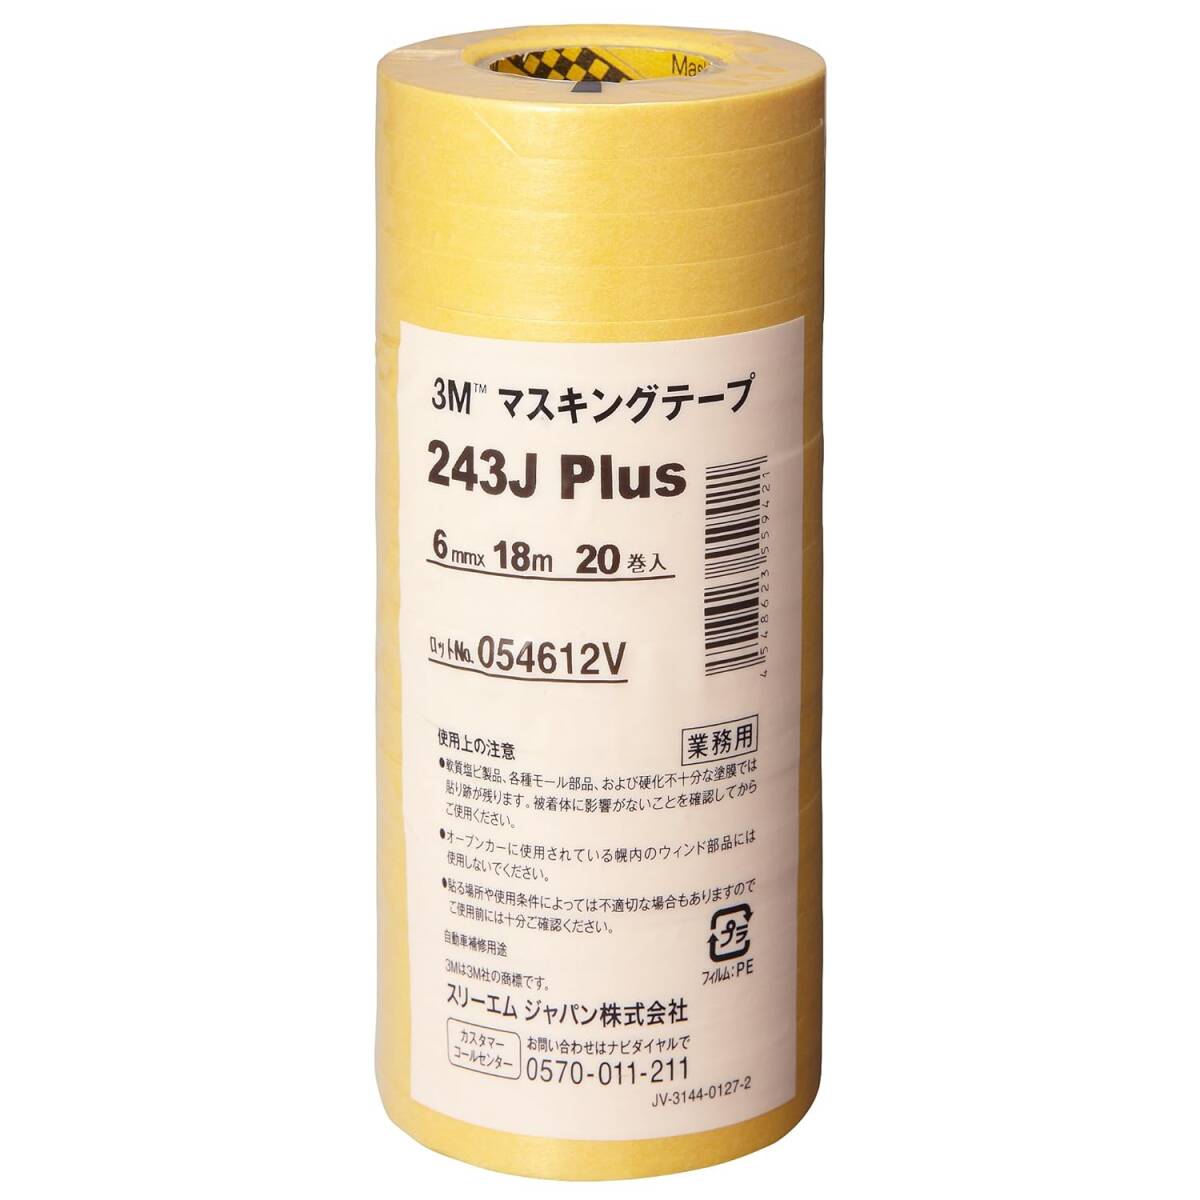 3M マスキングテープ 243J Plus 6mm×18M 20巻パック (243J 6)の画像1